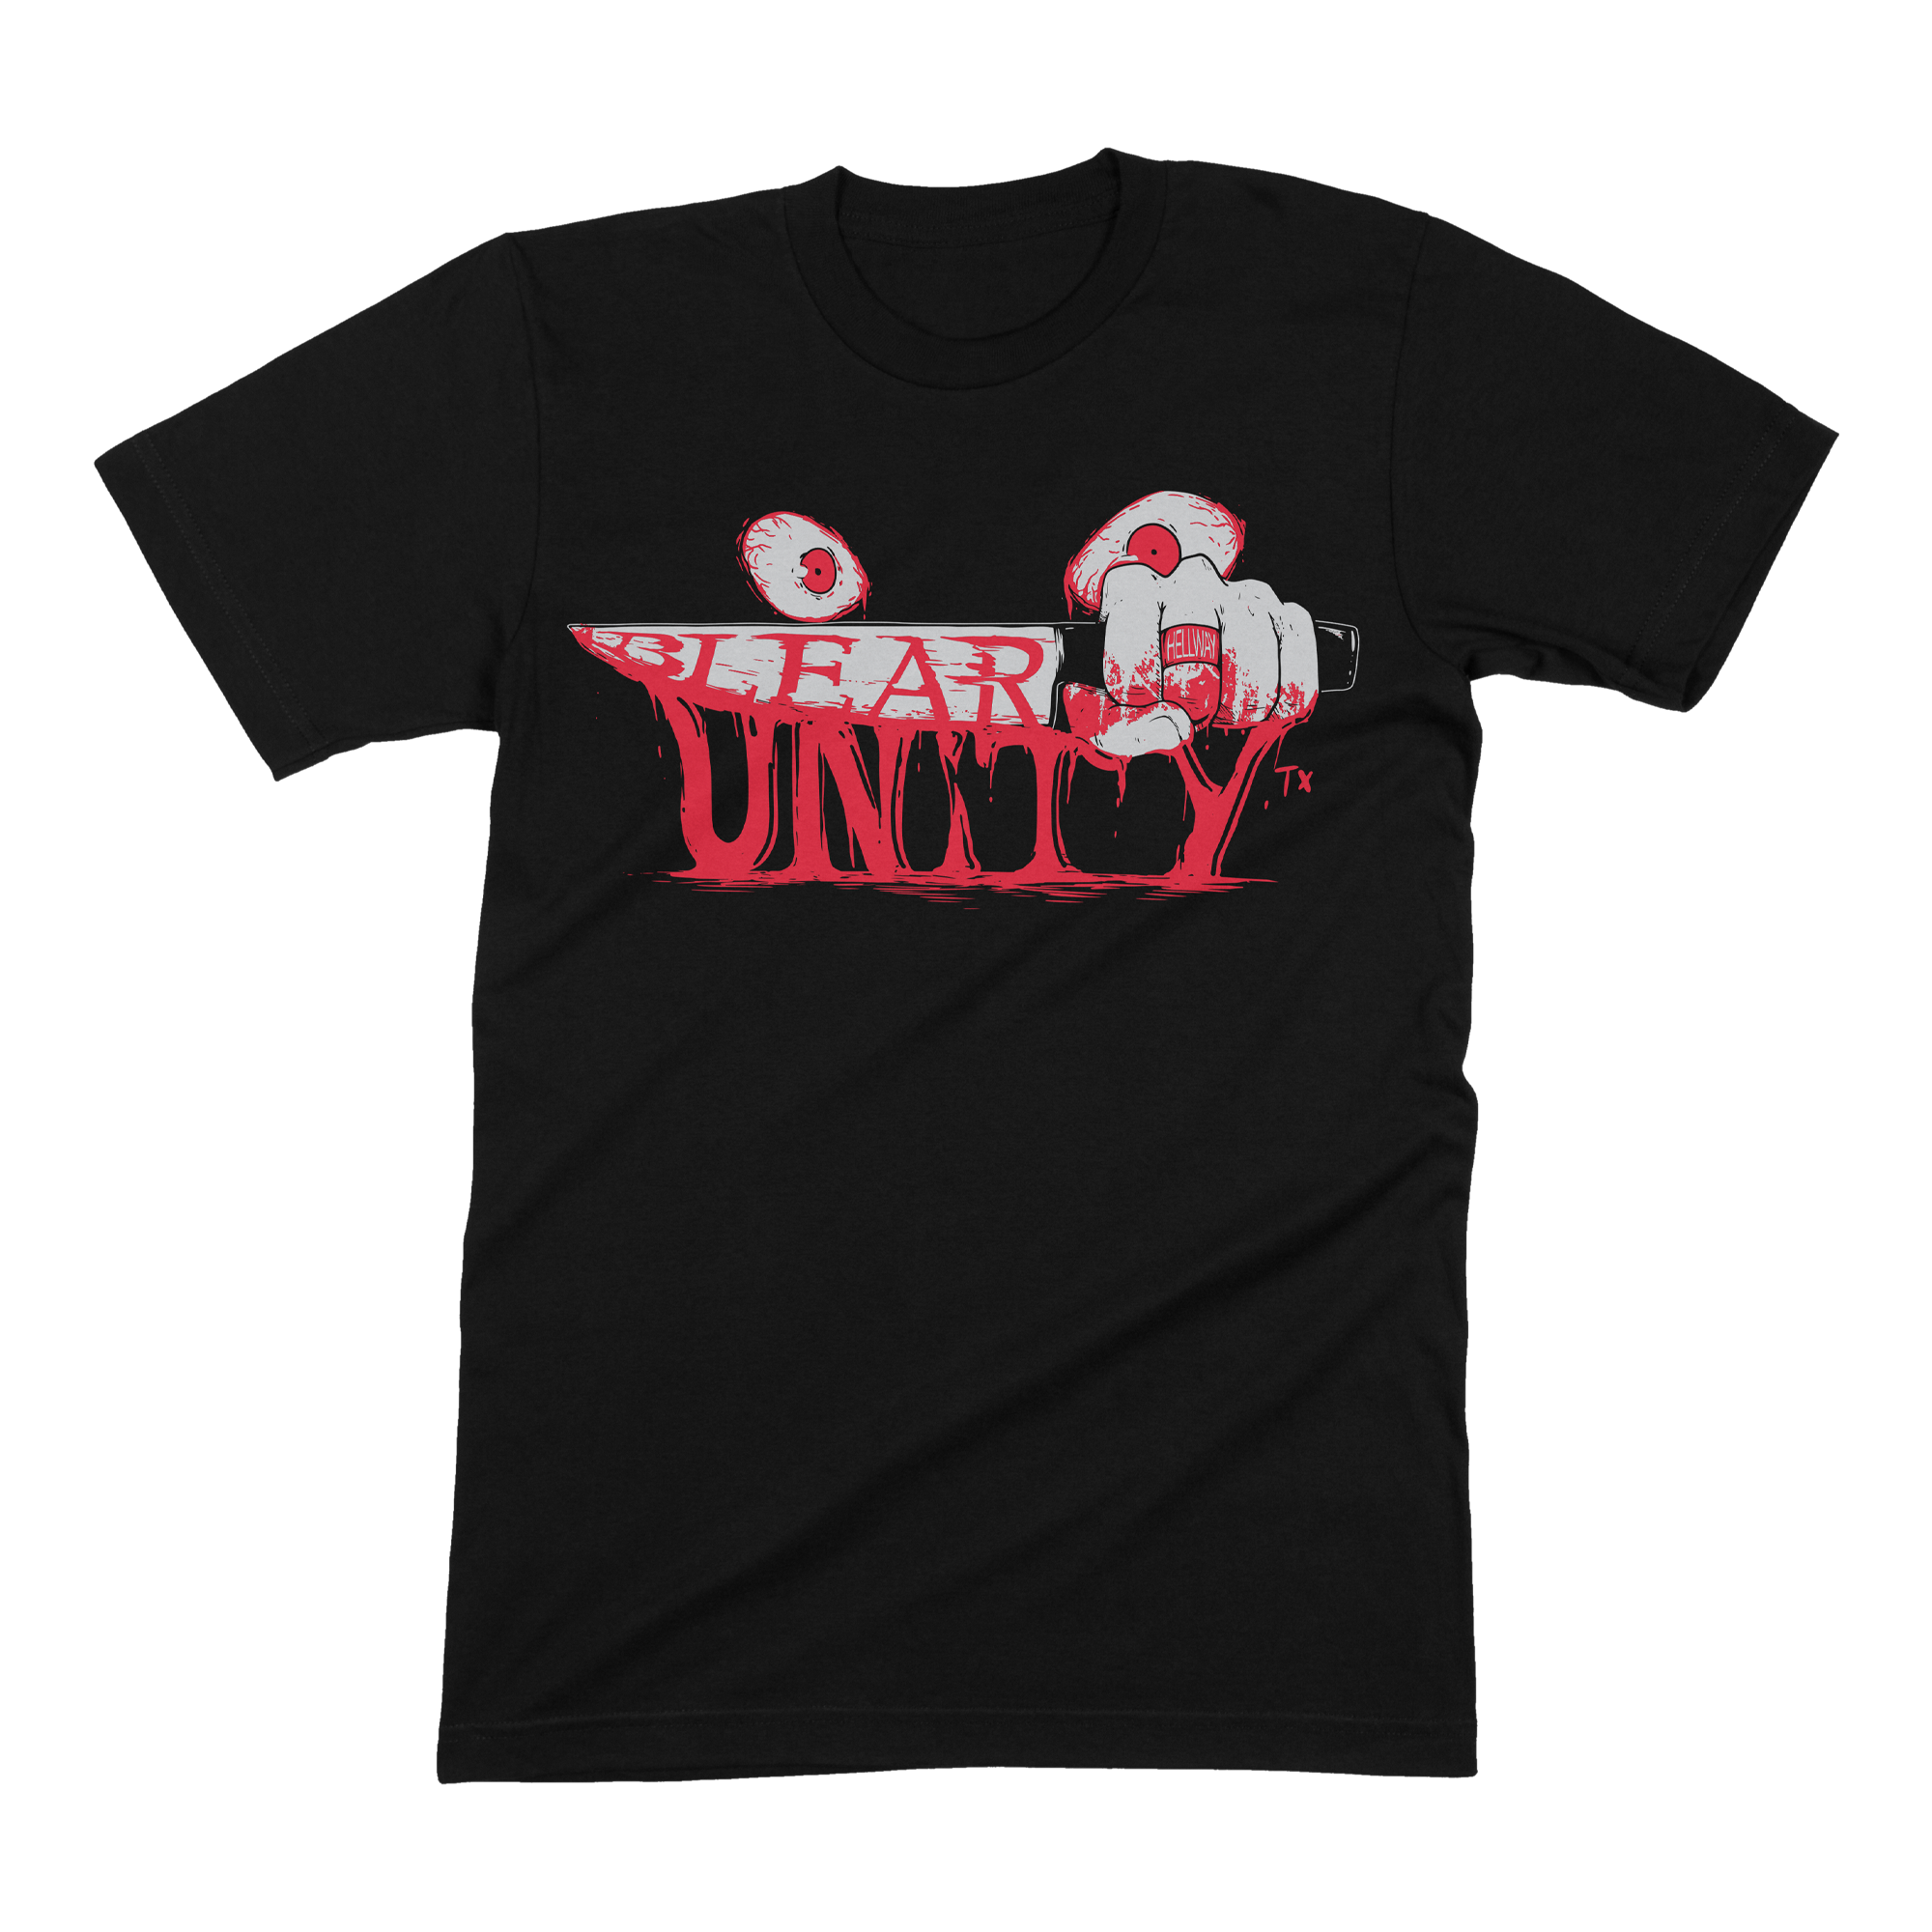 UnityTX - Blear Knife Shirt